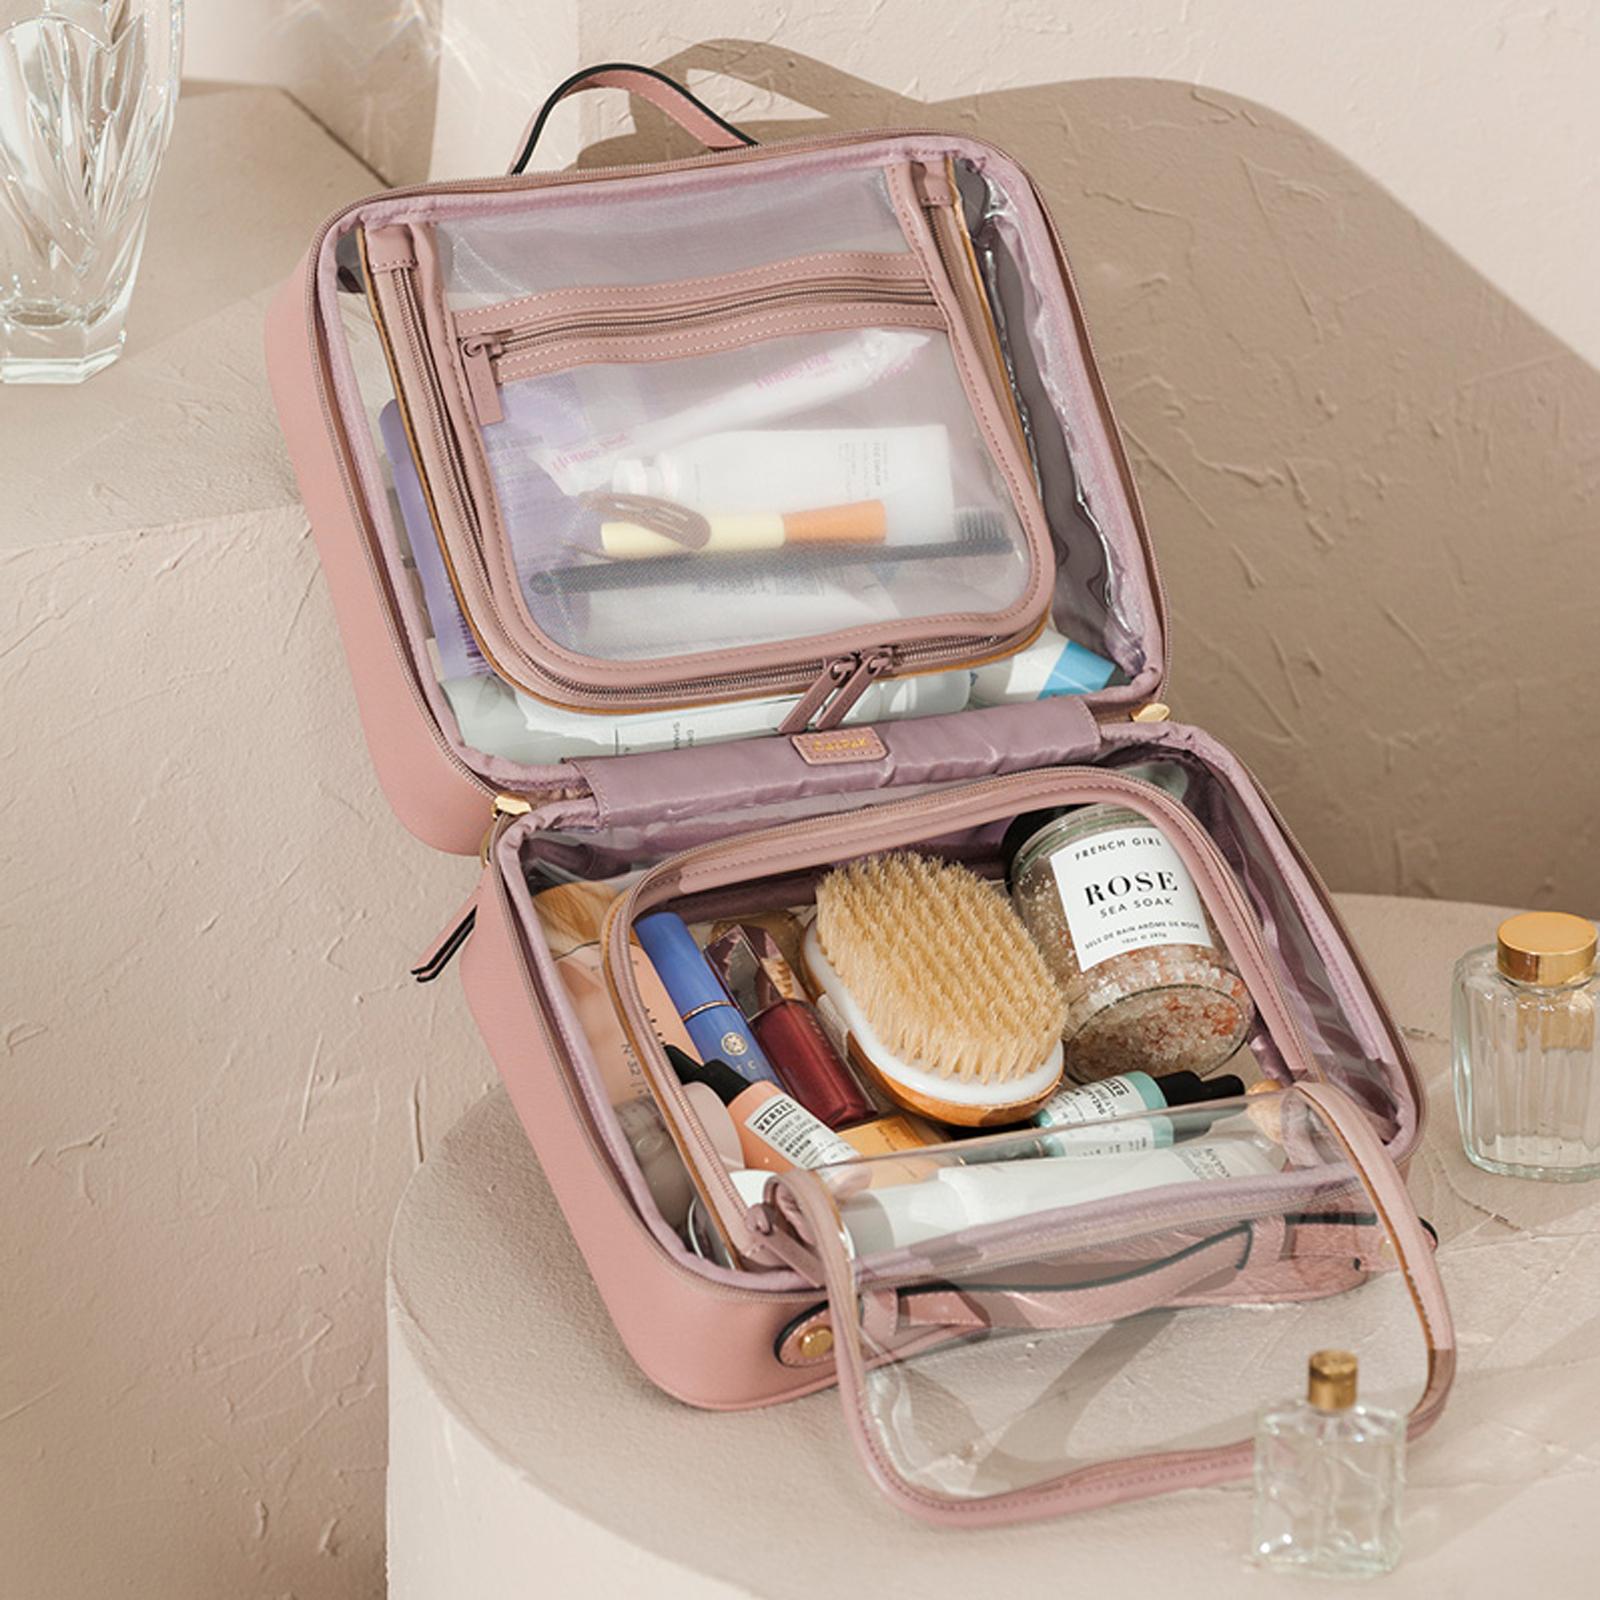 Aofa Makeup Bag Small Travel Cosmetic Bag Lightweight PU Leather